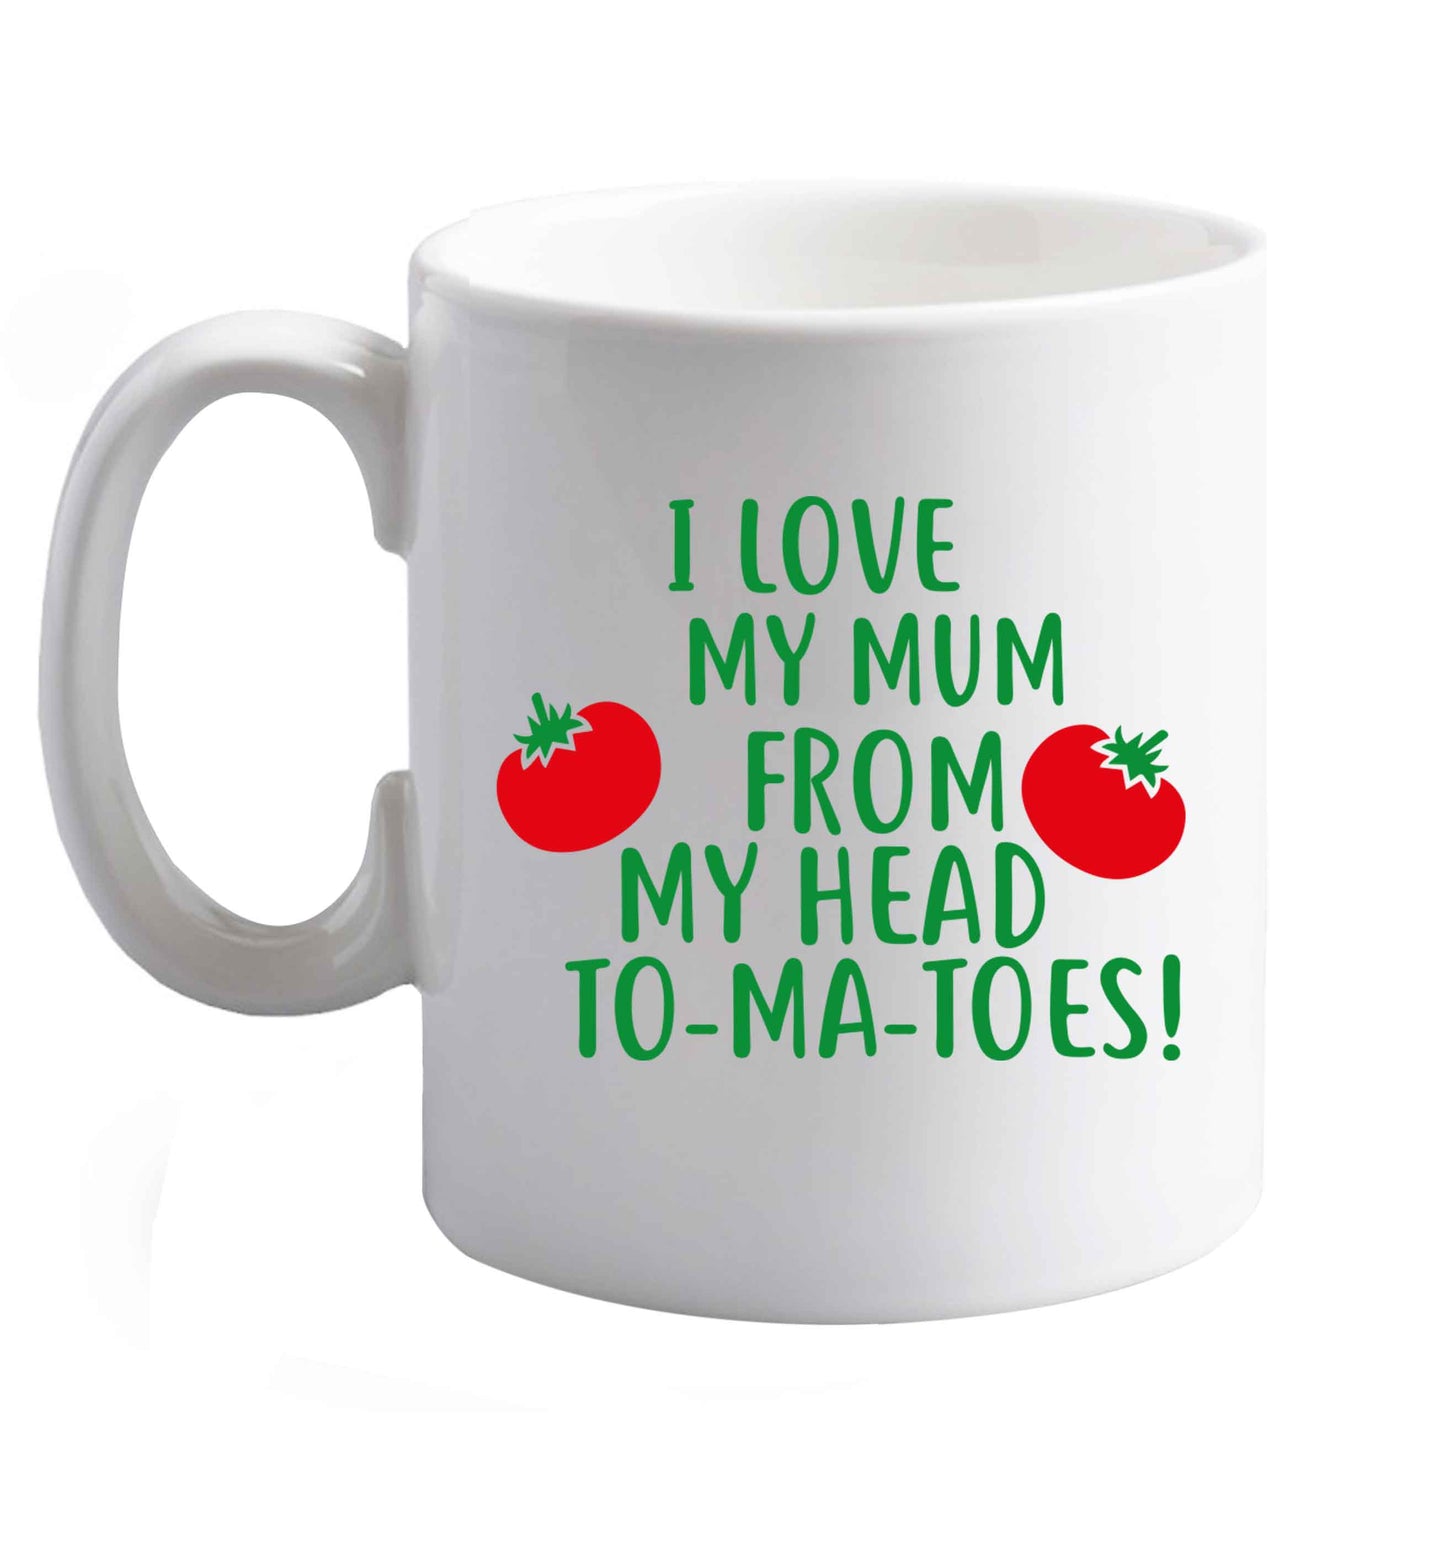 10 oz I love my mum from my head to-my-toes! ceramic mug right handed